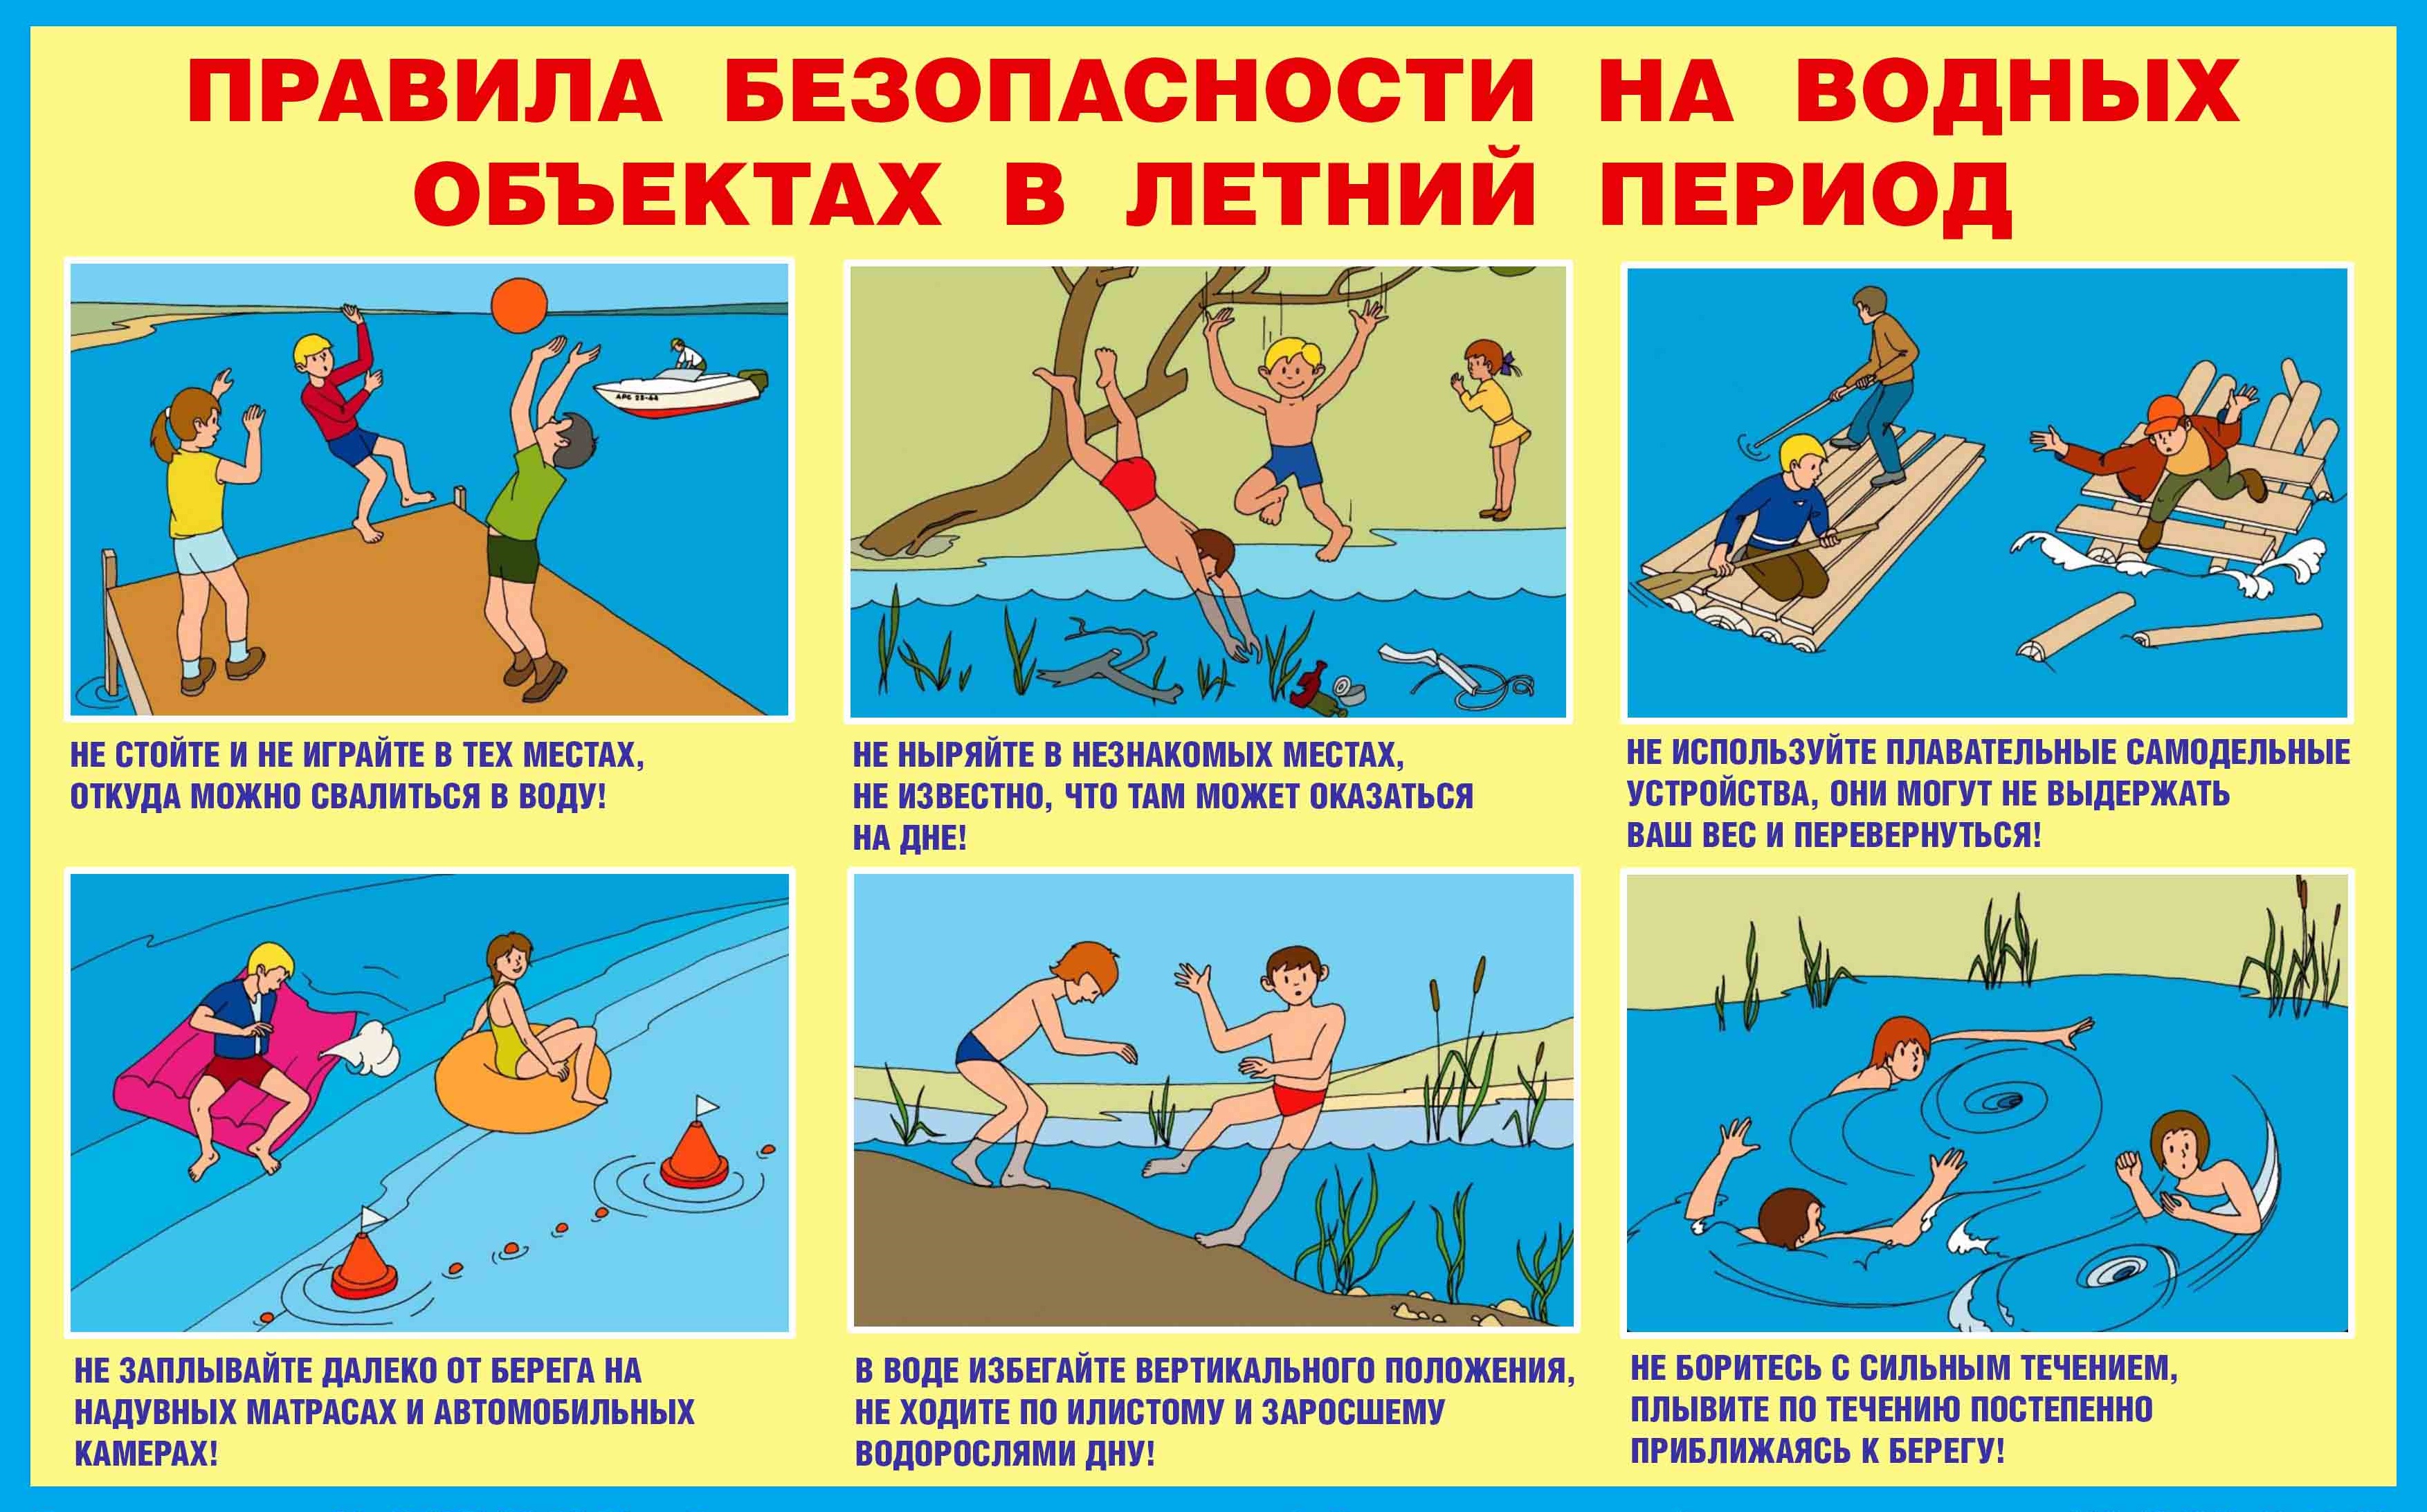 Правила безопасности на воде в летний период.